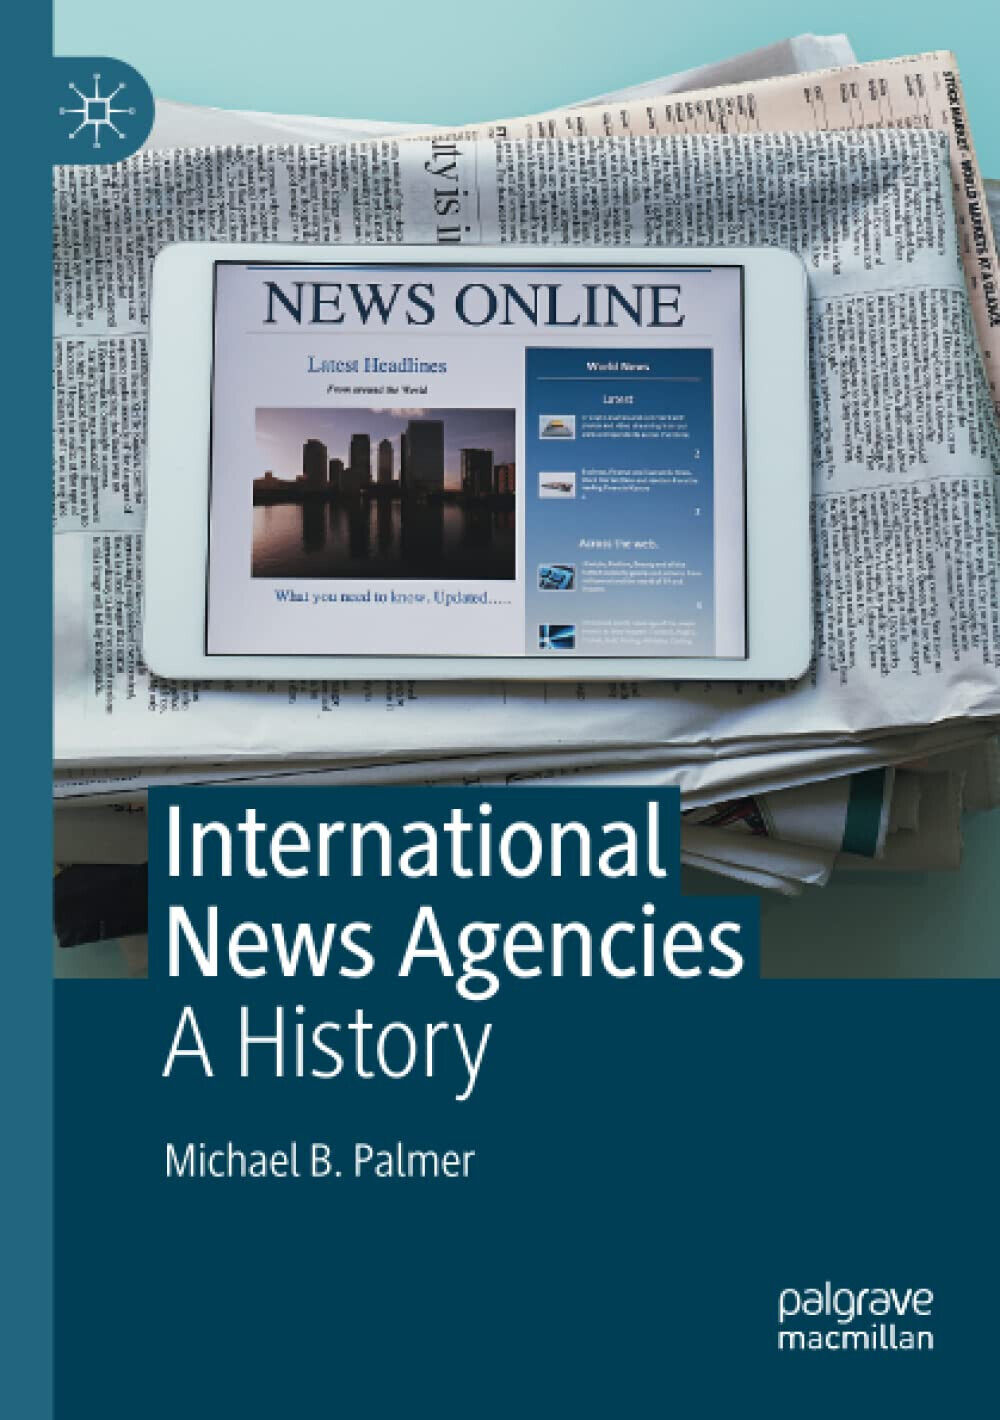 International News Agencies - Michael B. Palmer - Palgrave, 2021